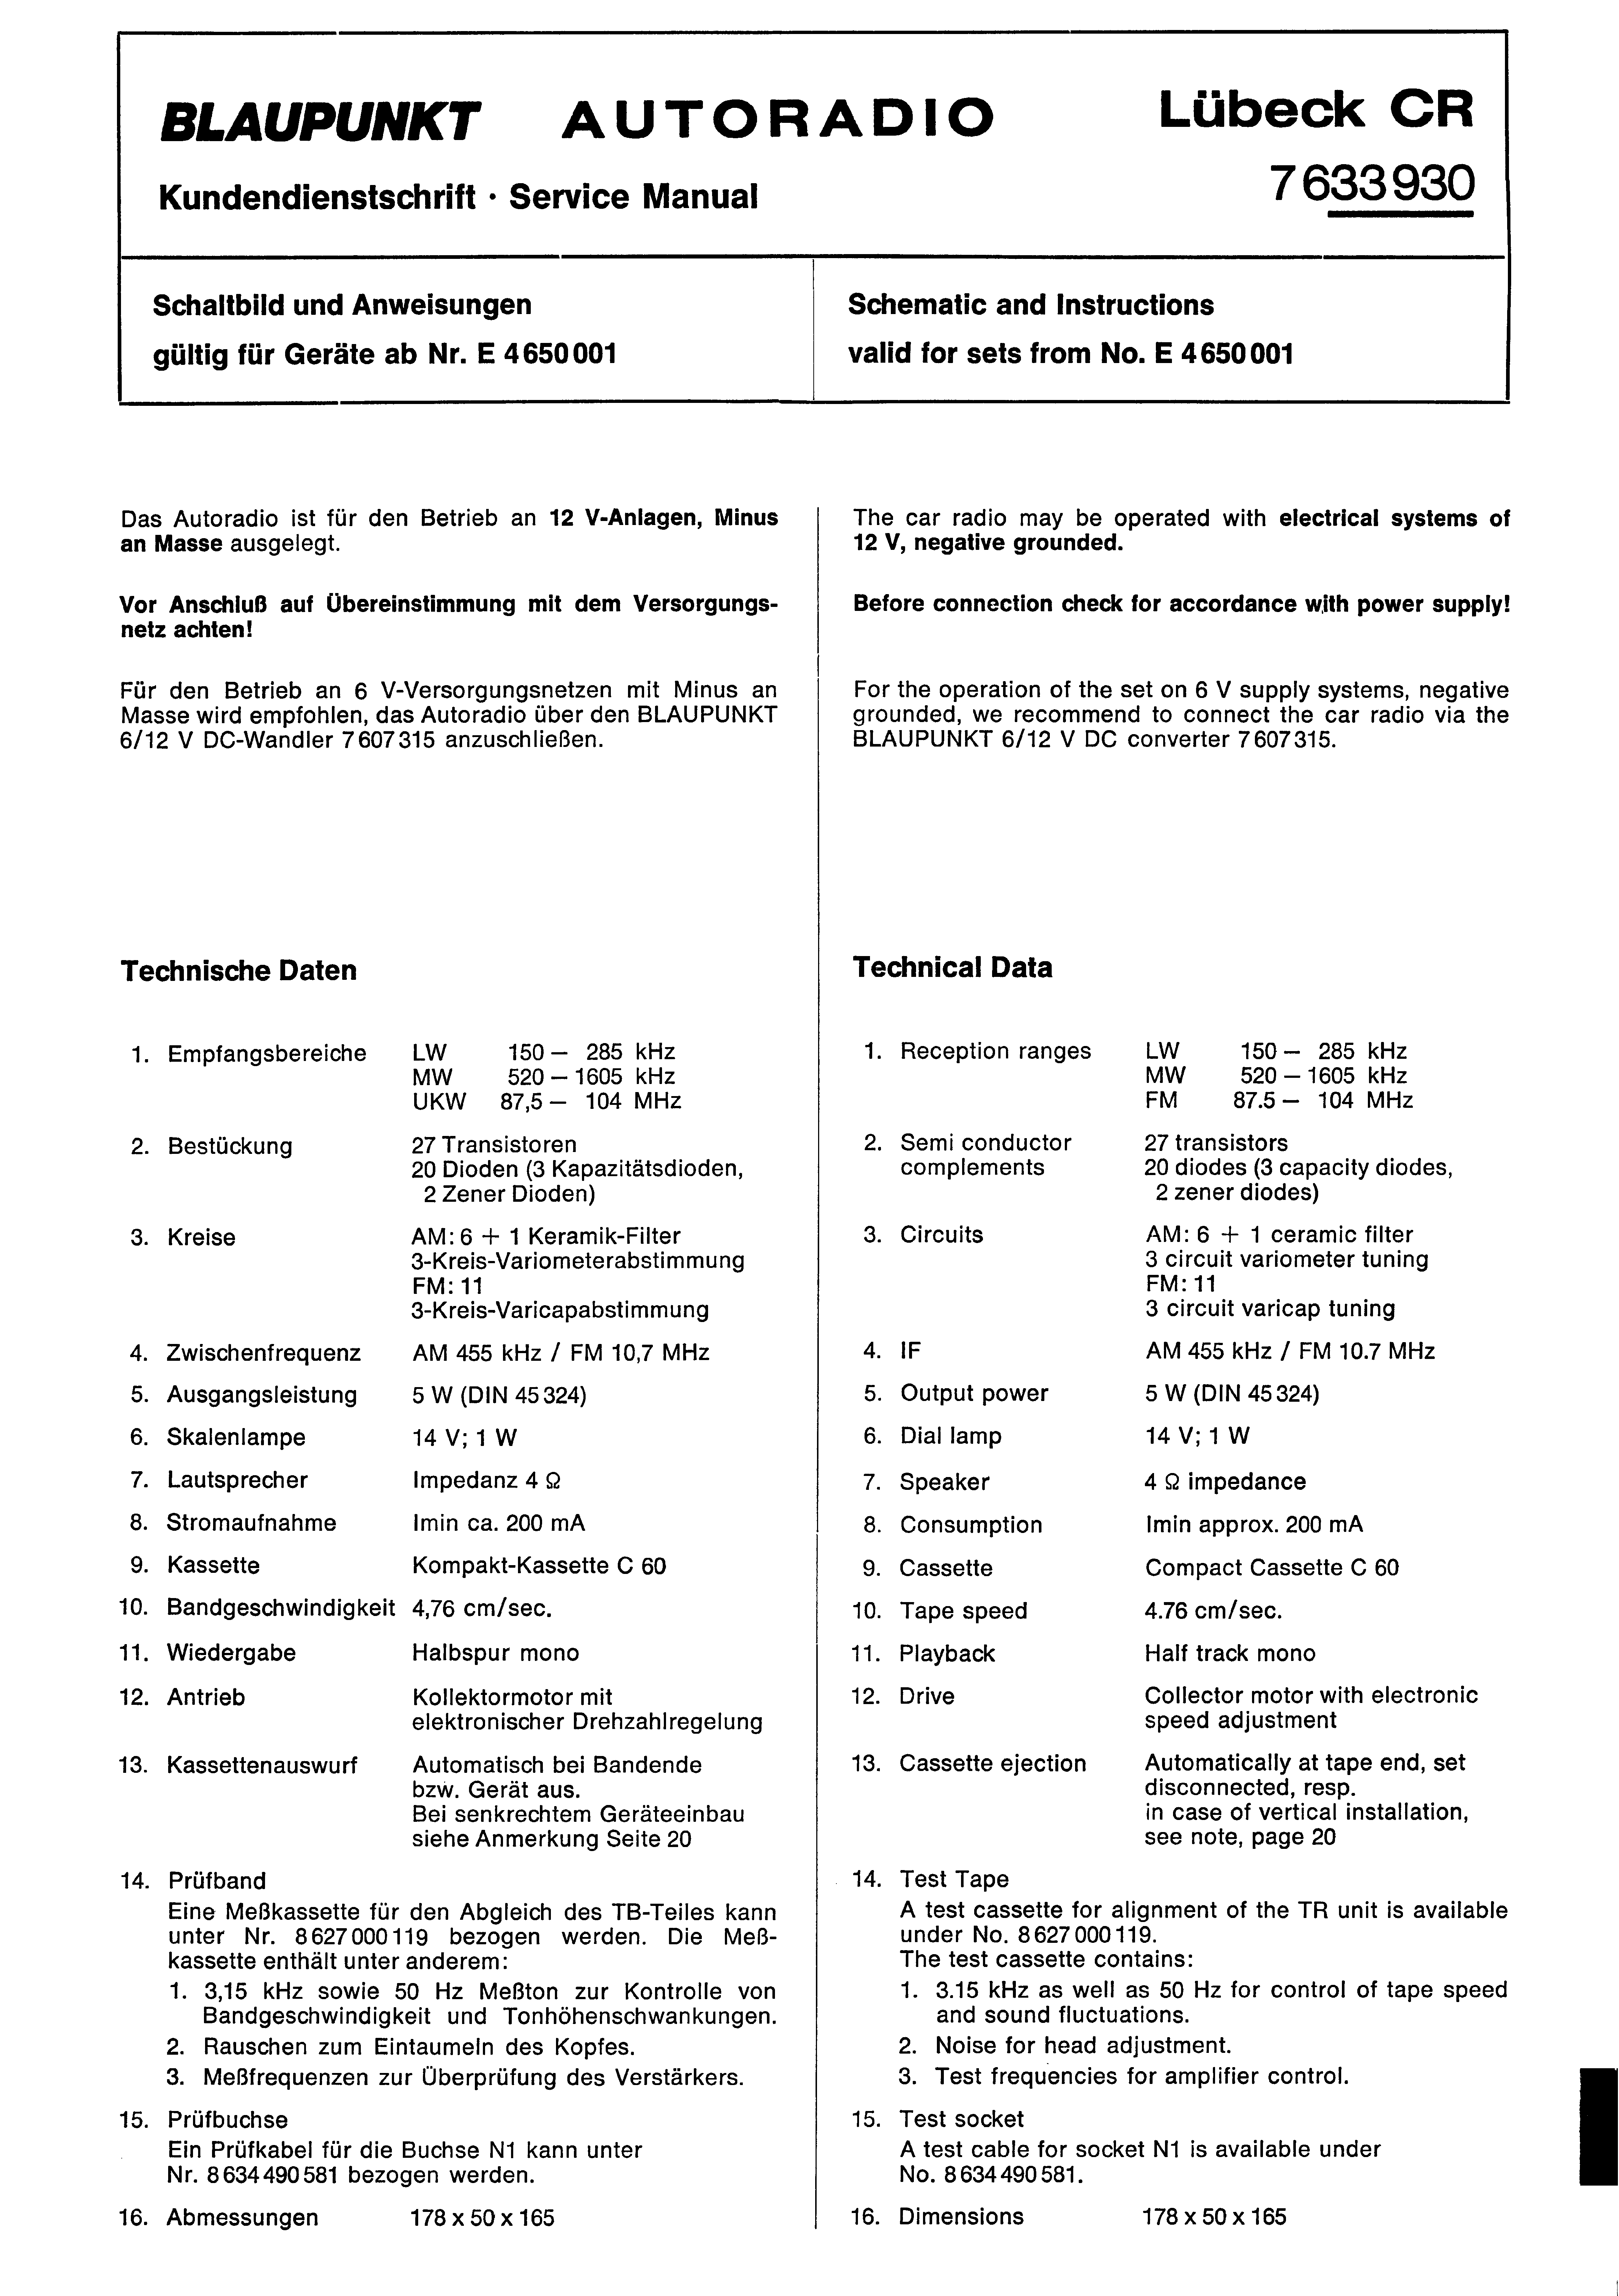 BLAUPUNKT LUEBECK CR SM service manual (1st page)